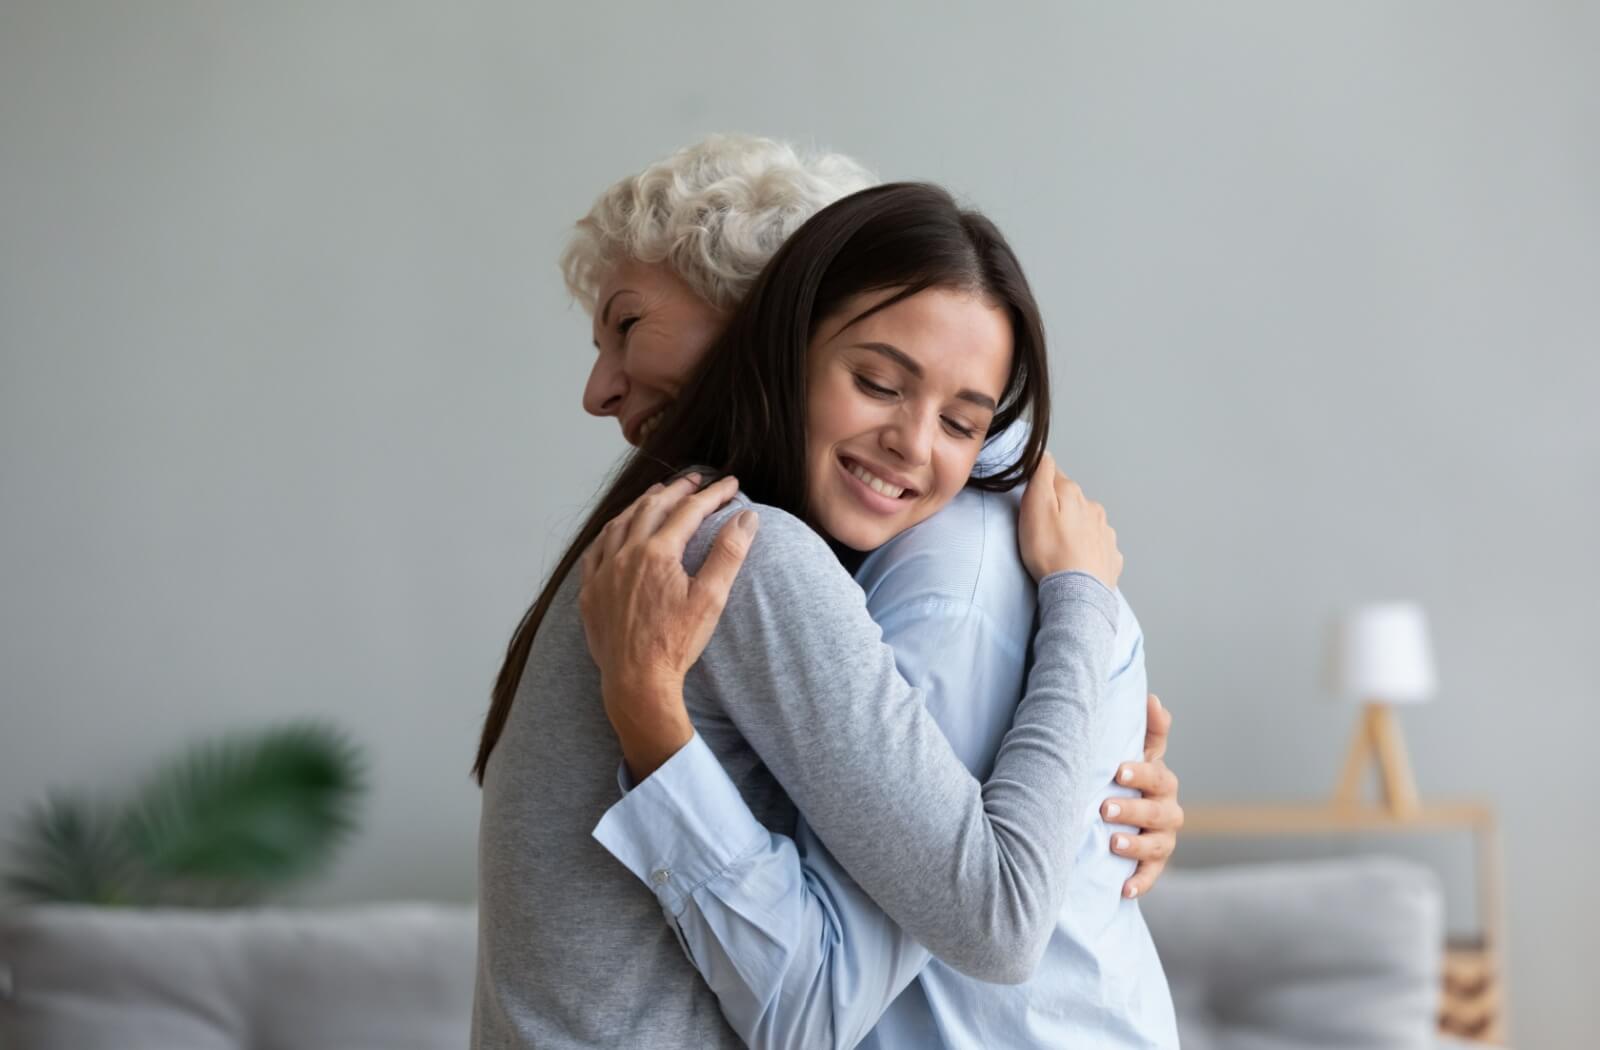 A woman hugging her older adult mother lovingly.